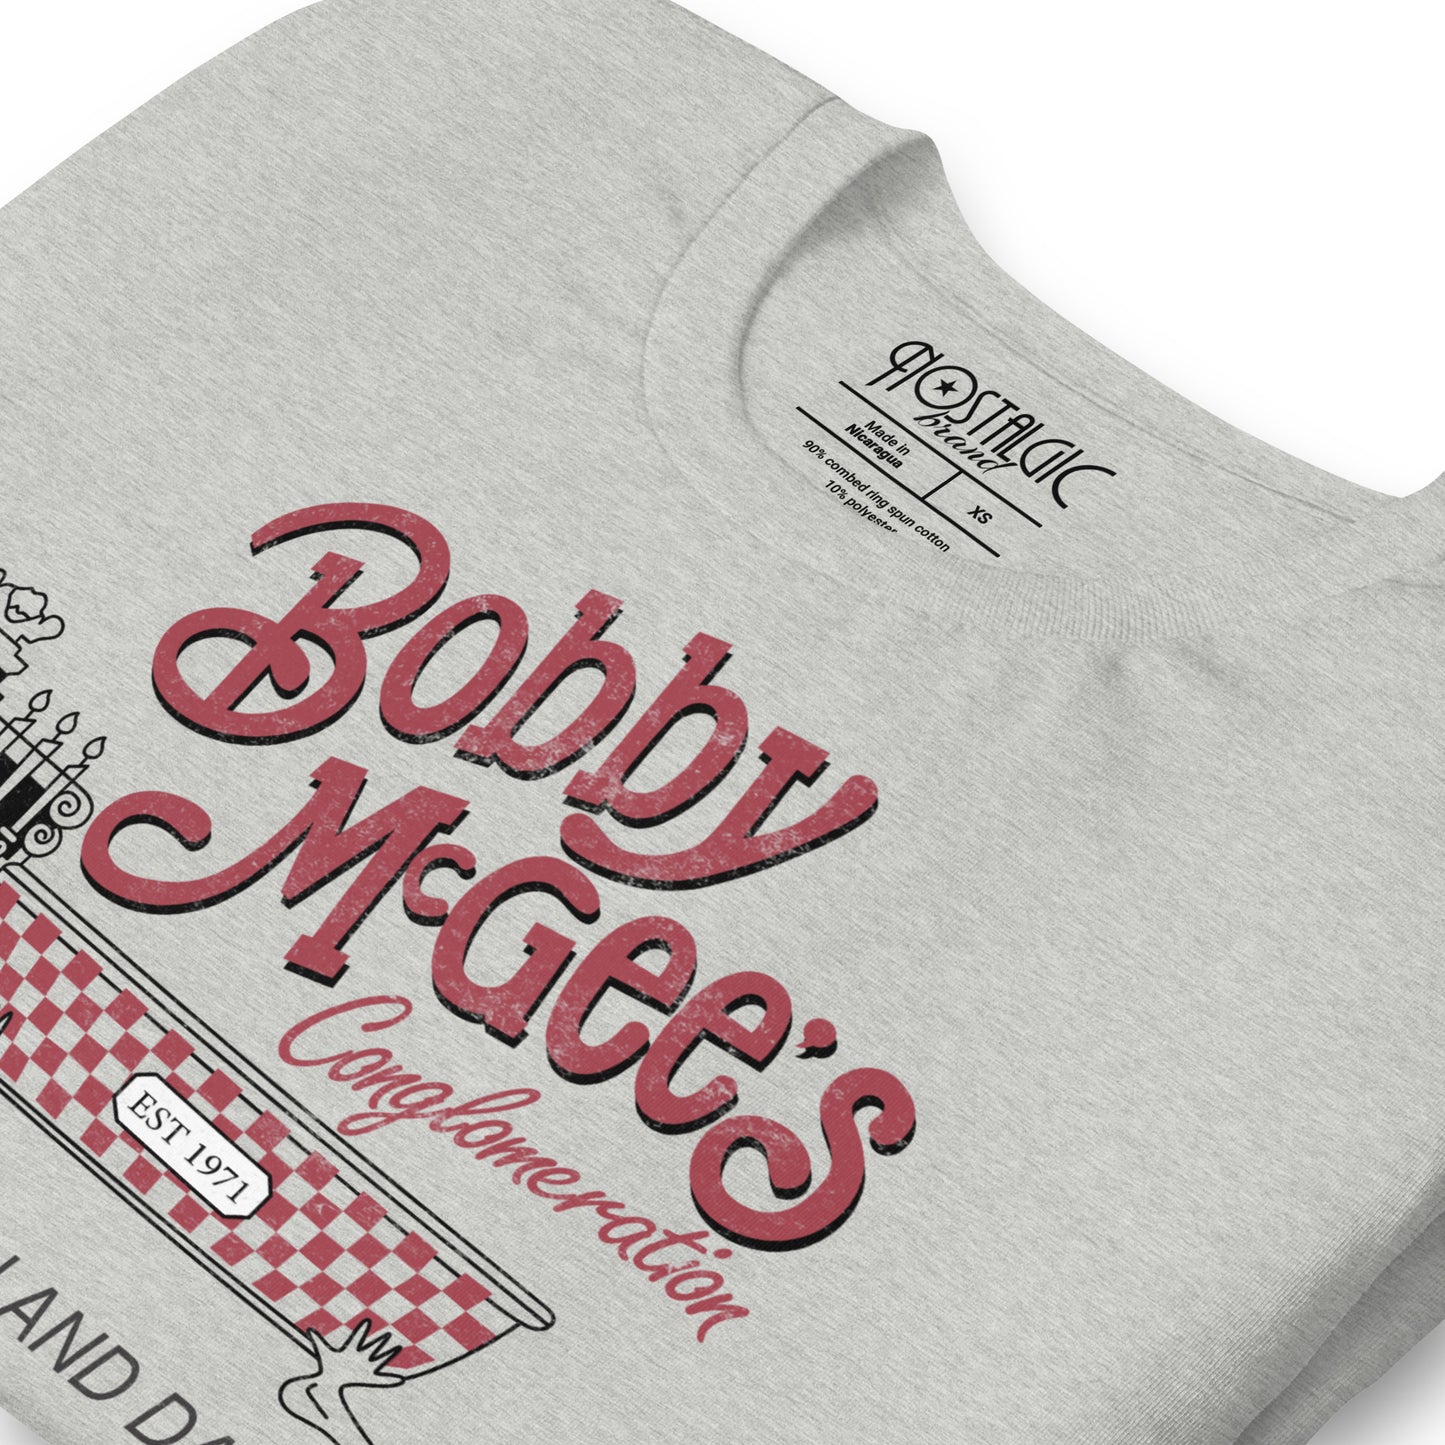 Bobby McGee's